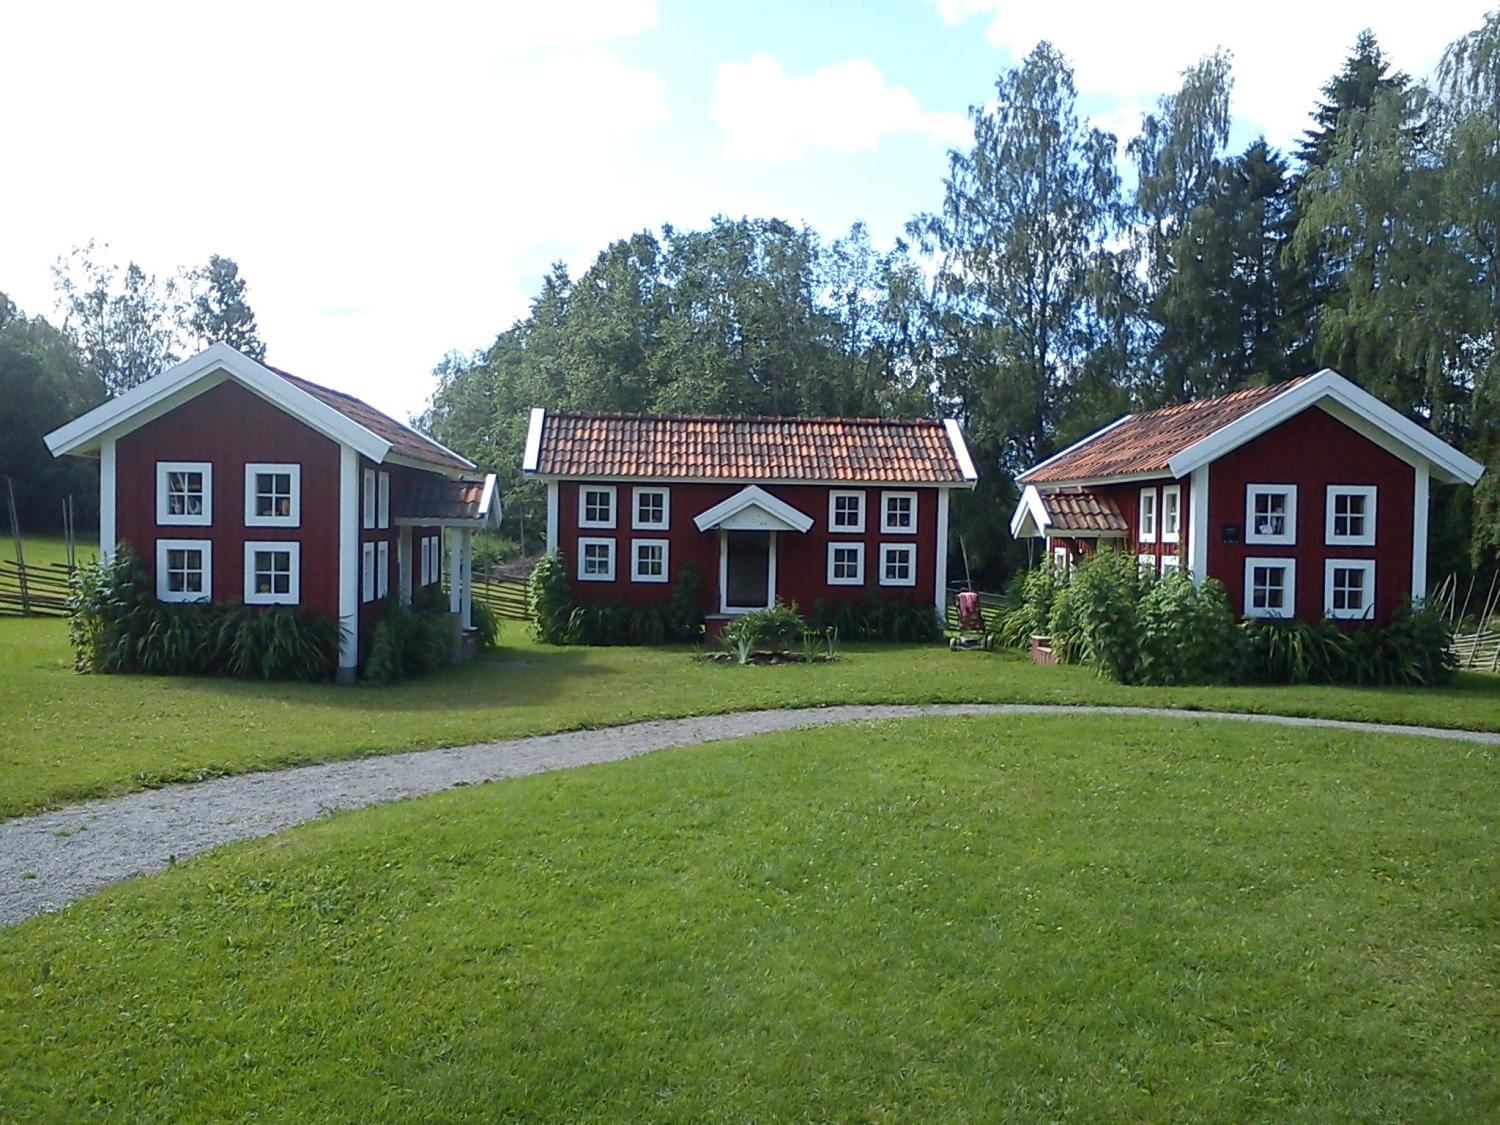 Xperience the world heritage "Farmhouses of Hälsingland"